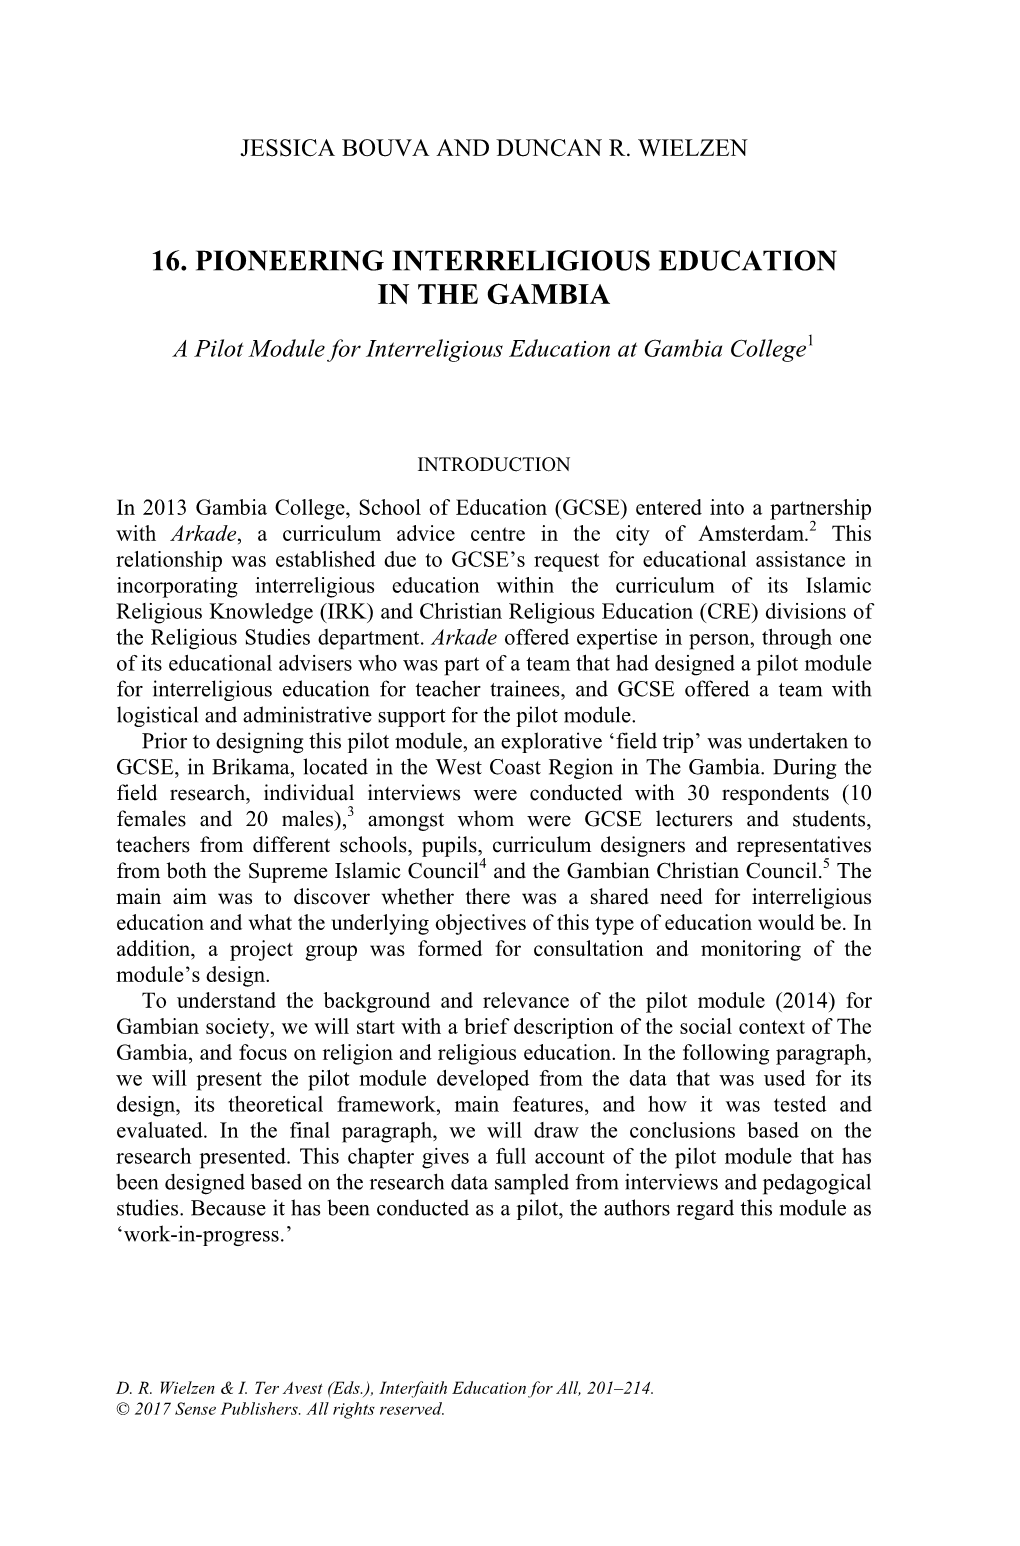 16. Pioneering Interreligious Education in the Gambia